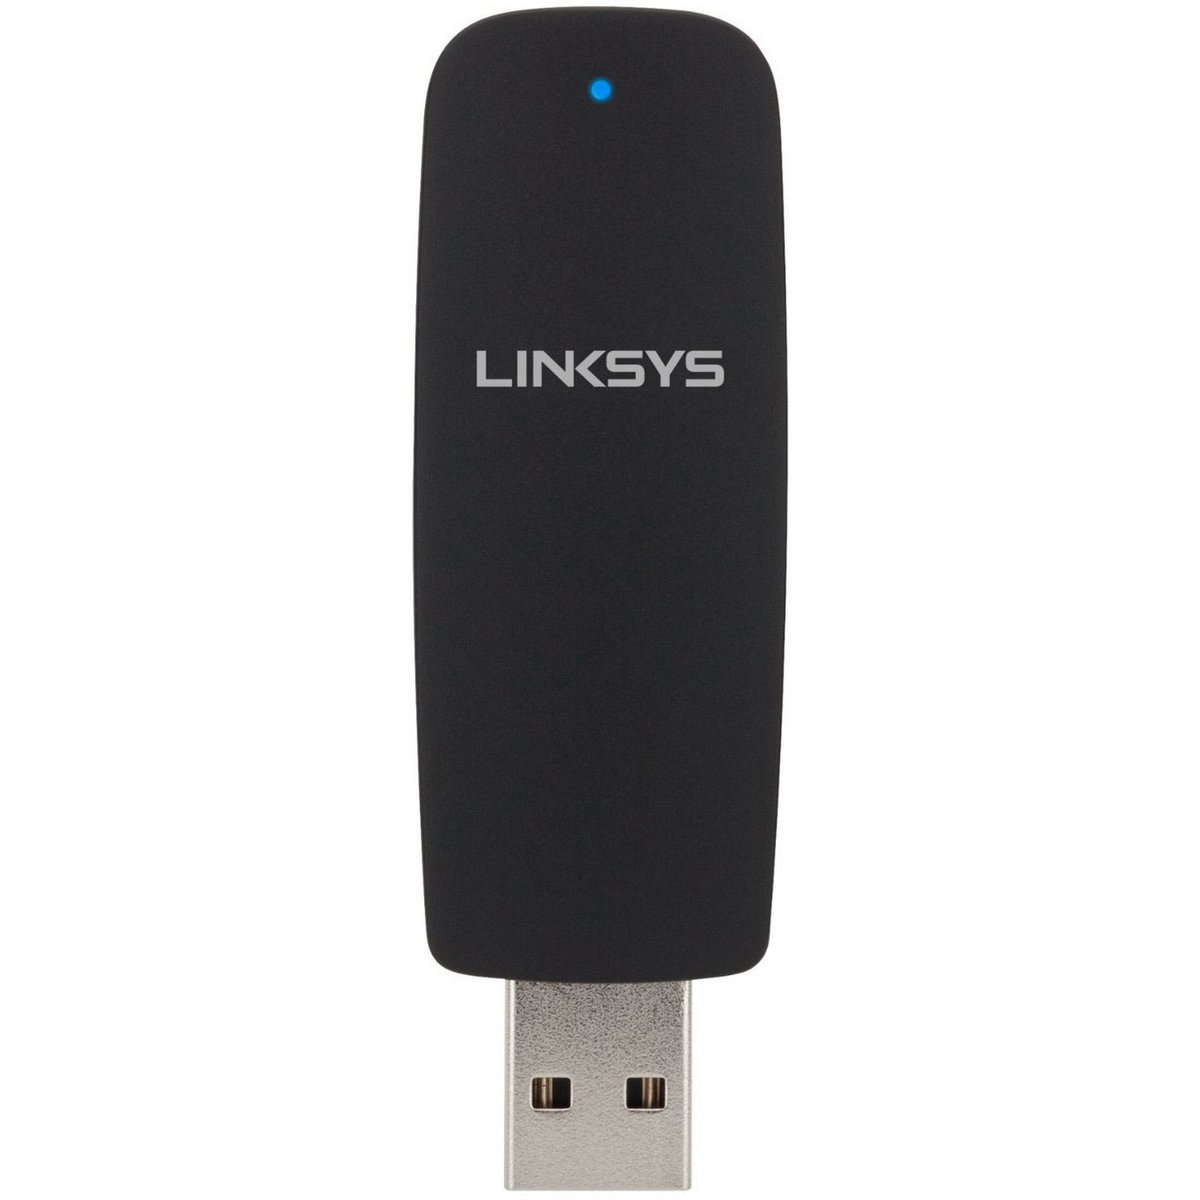 Linksys AE2500 N600 Dual-Band Wireless-N USB Adapter